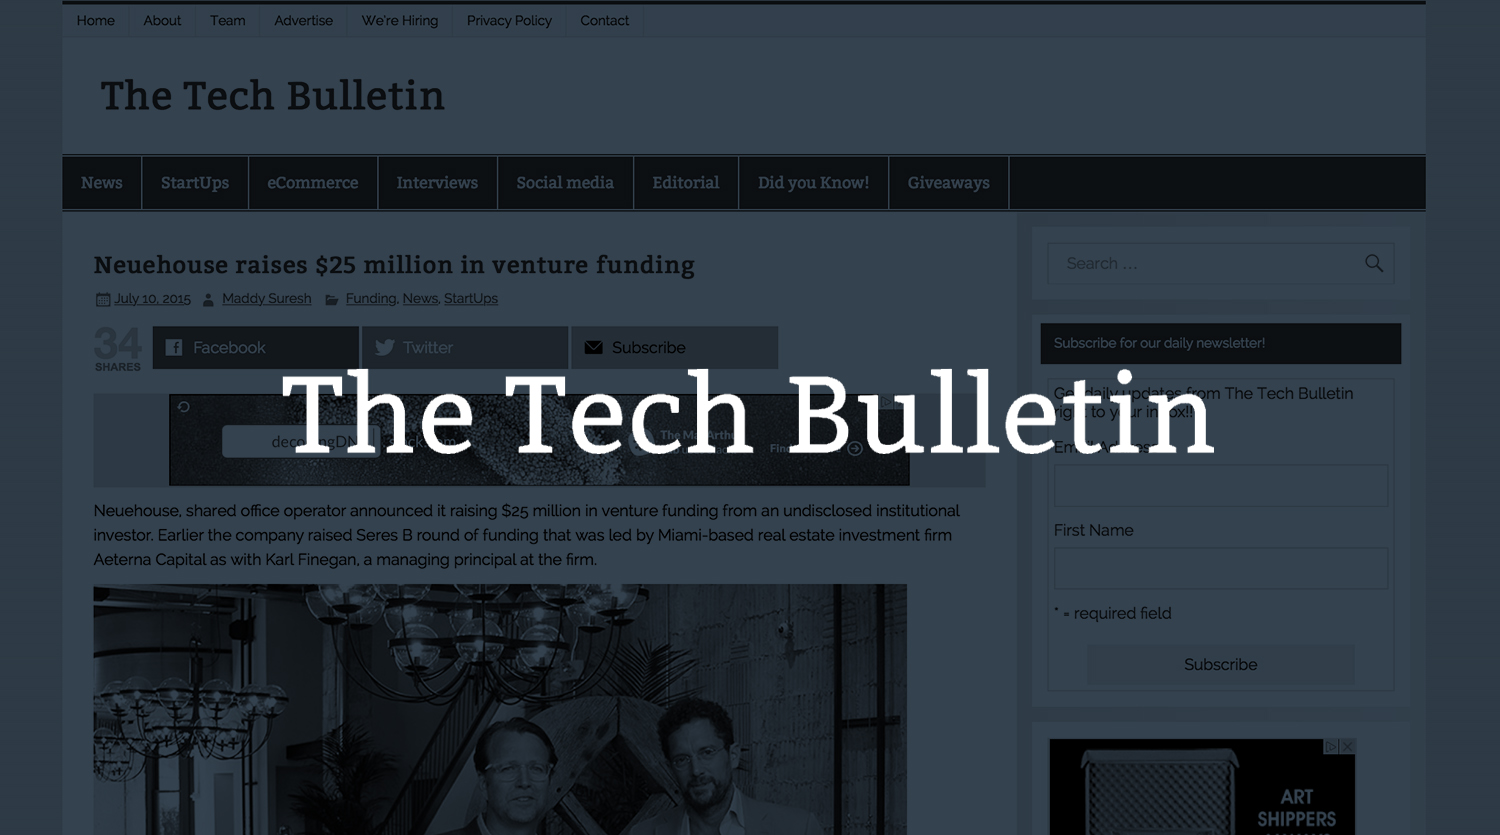 The Tech Bulletin